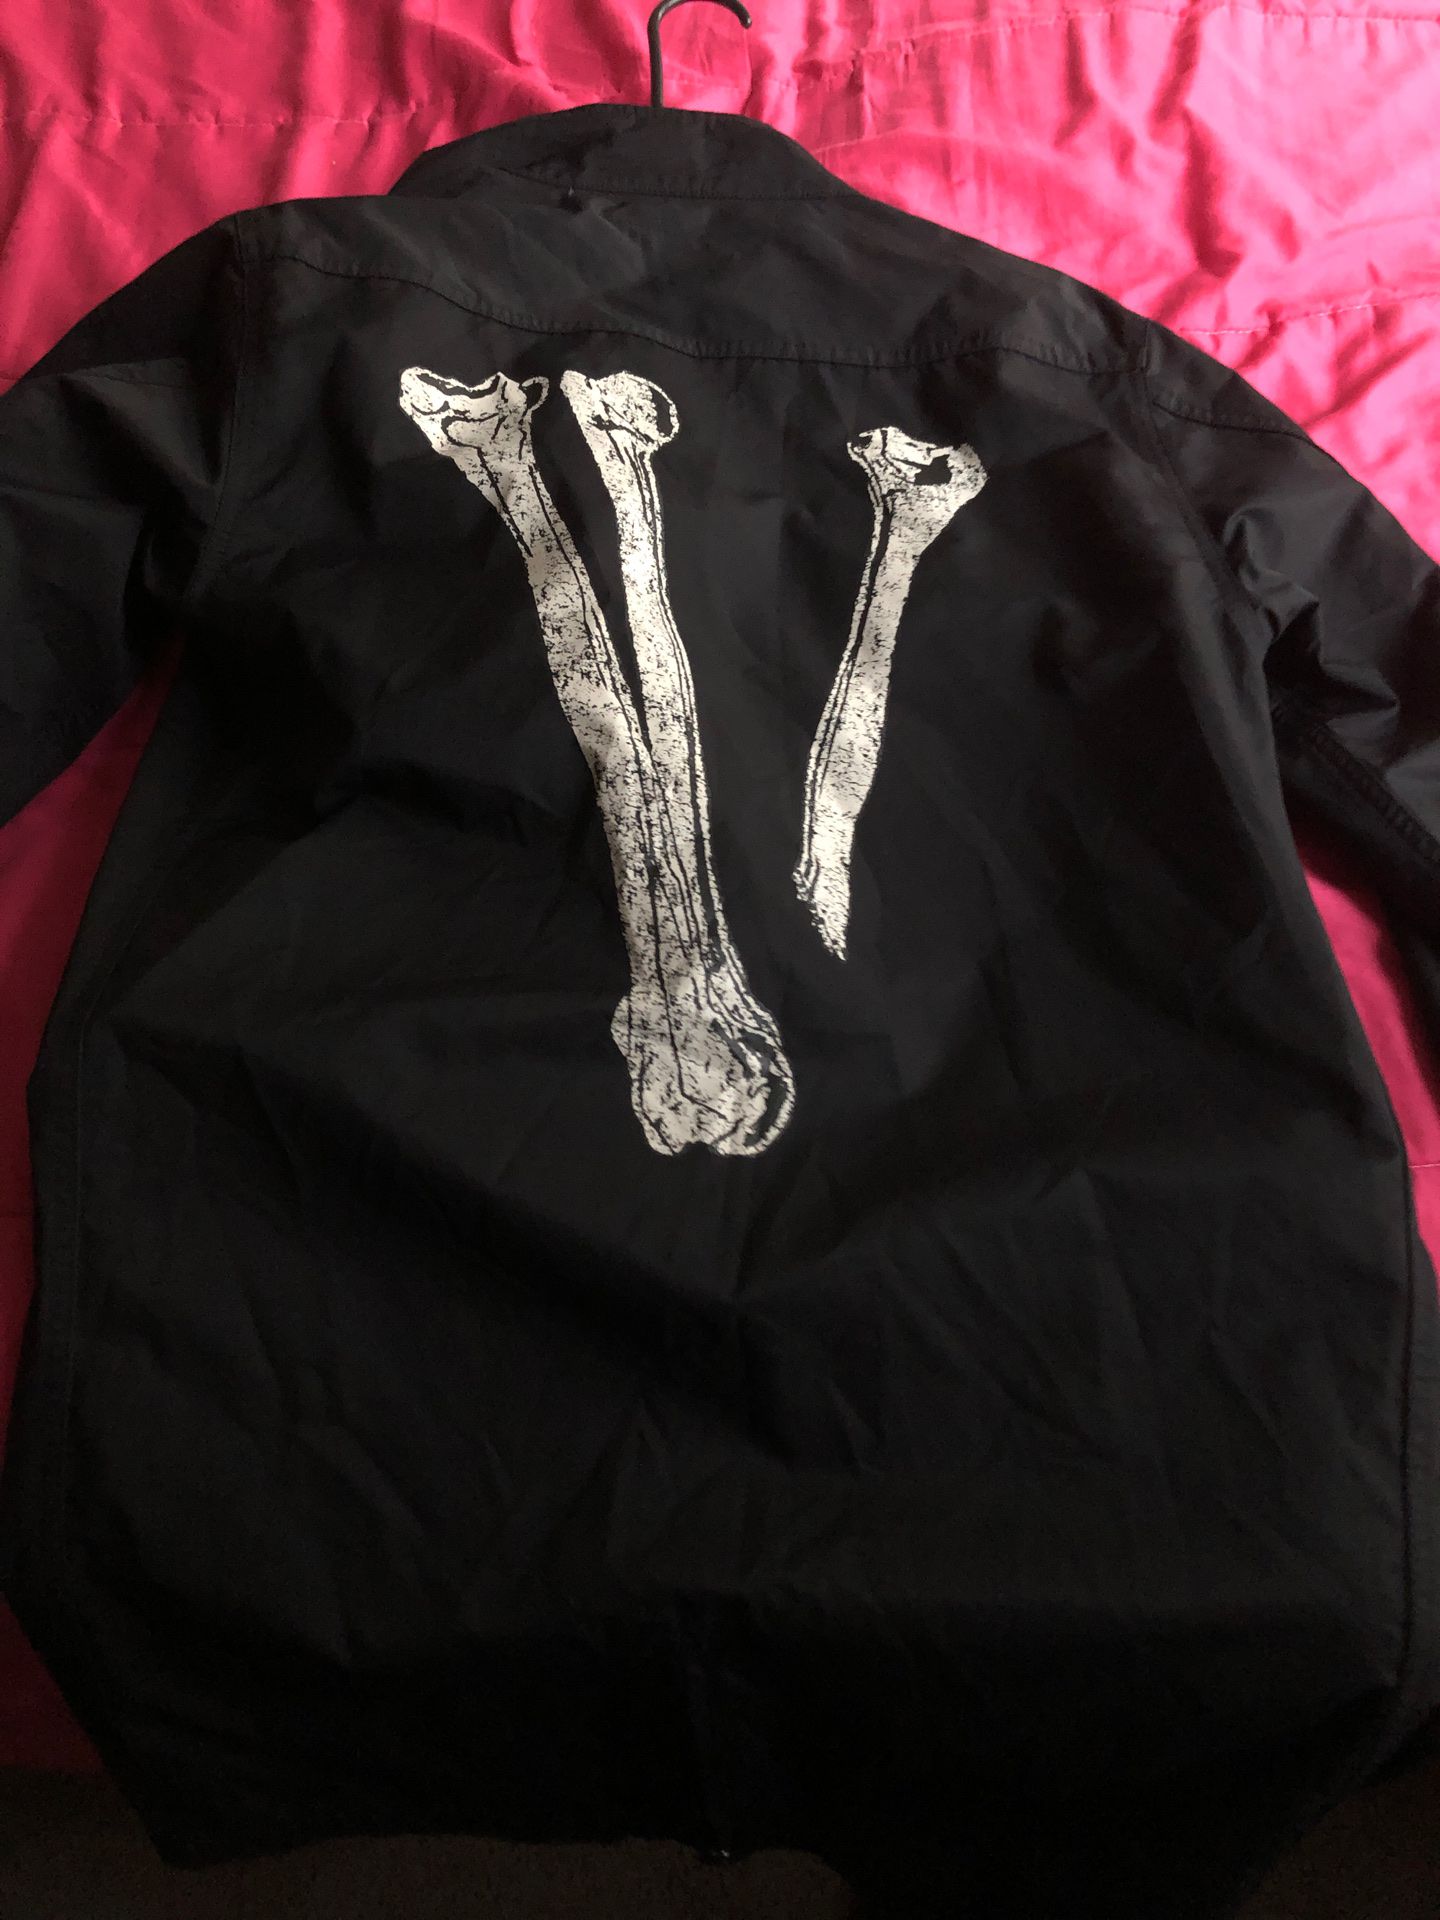 Unreleased Vlone trench coat